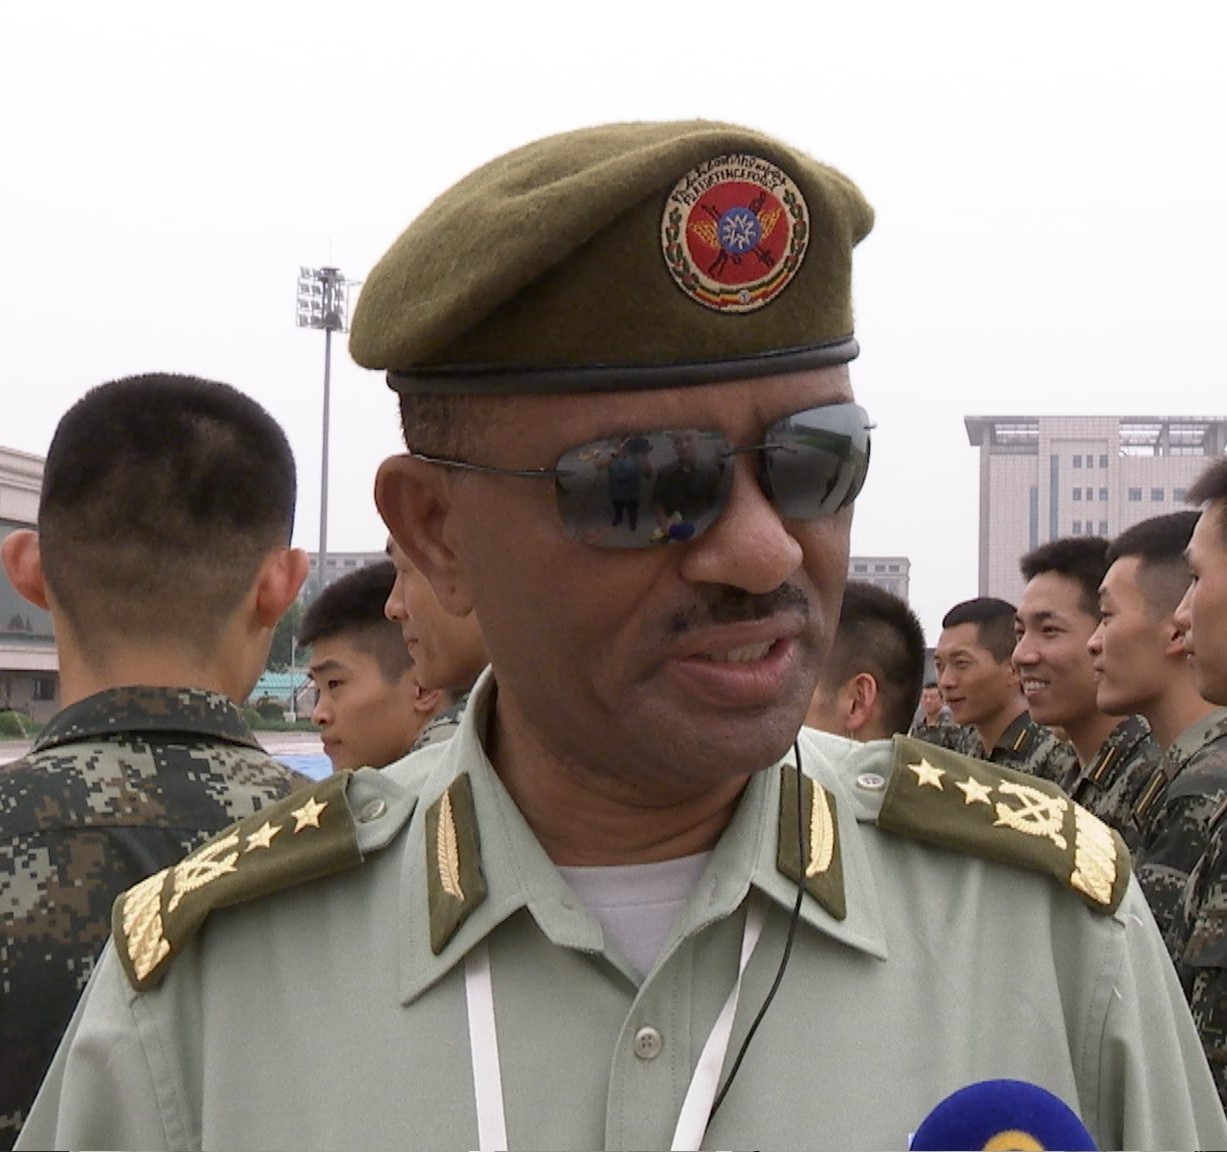 CTSAM-VM: Unified forces desert training camps again after failed graduation